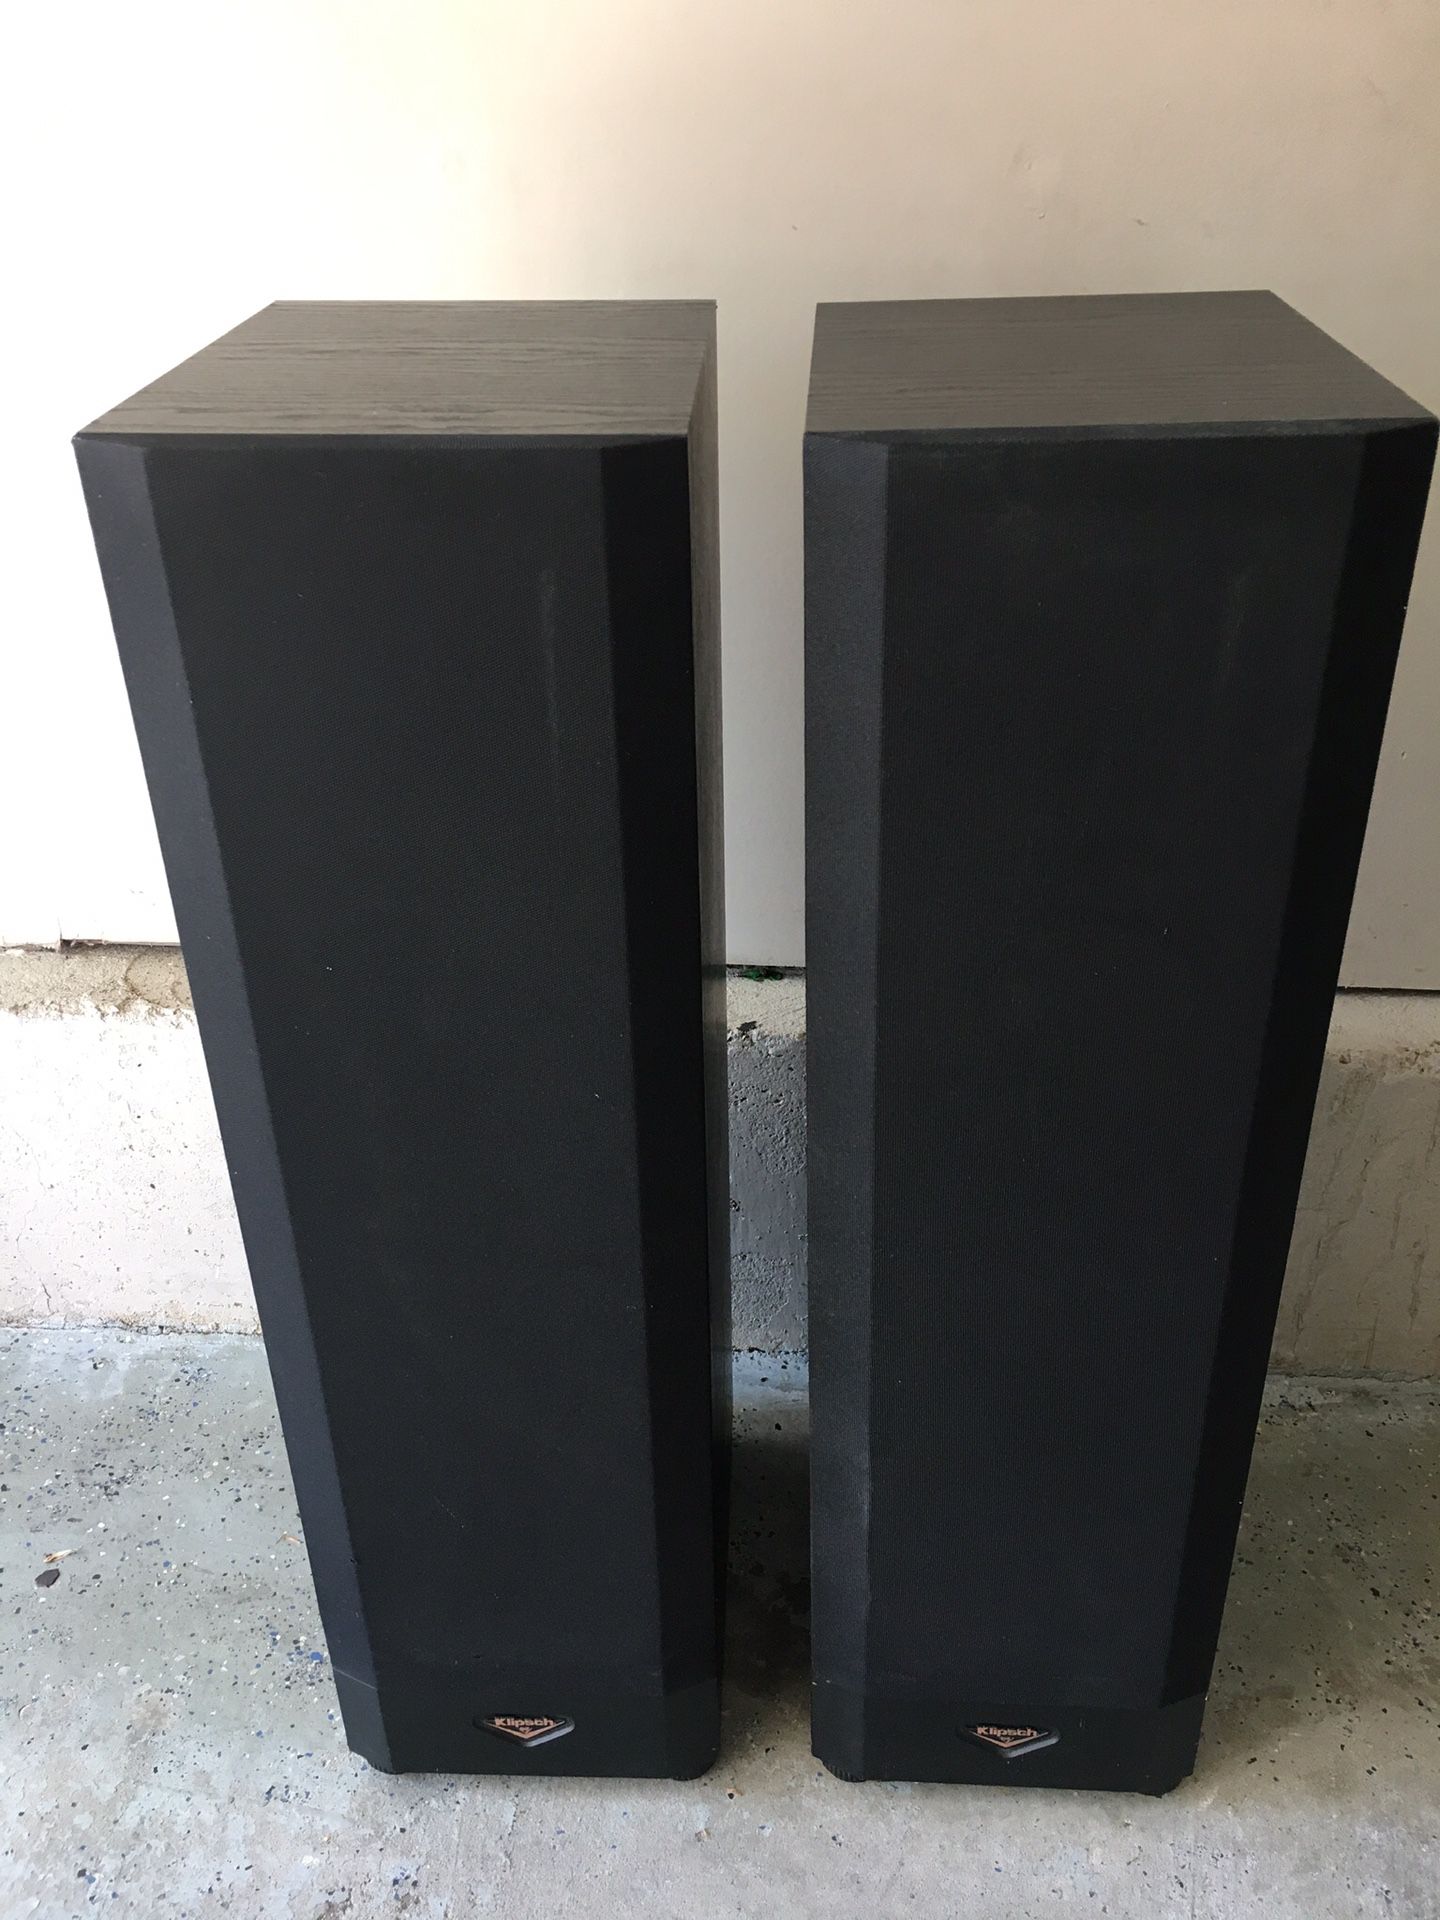 Klipsch ksf 8.5 speaker pair !! $300 or Best Offer!!